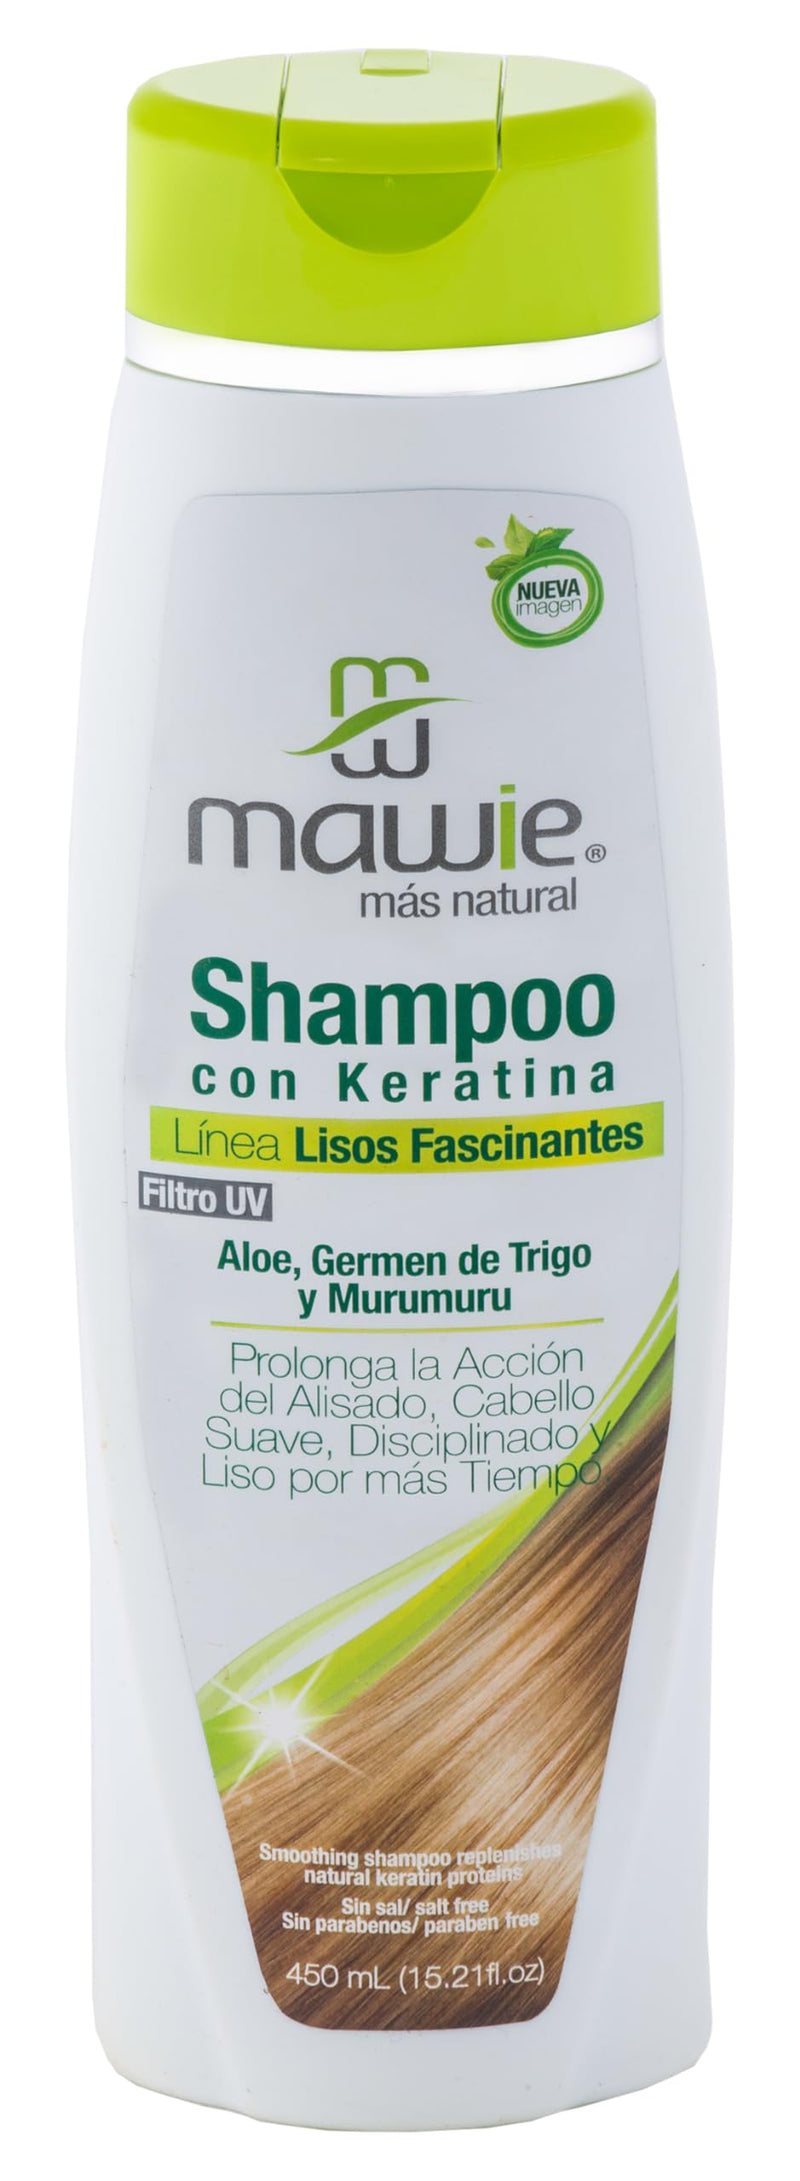 Keratin Smoothing Shampoo, Conditioner and hair mask Set | keratin Hair Treatment for Smoothing & Nourishing | with keratin, aloe vera, murumuru | Paraben and Sulfate Free.